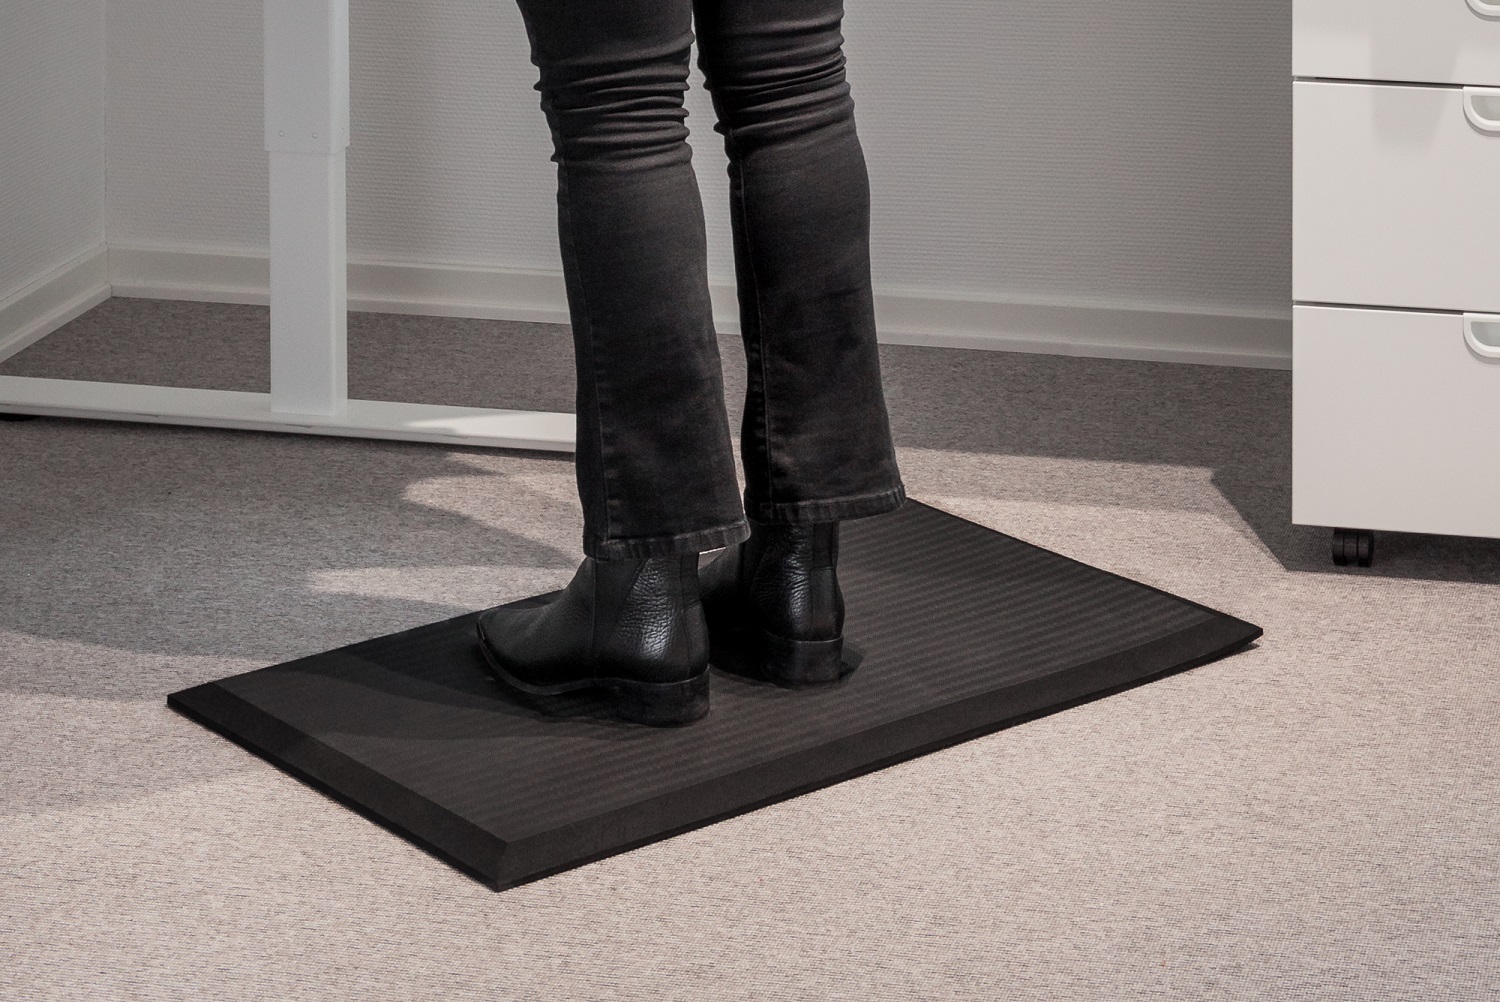 Tpe-step ergonomic anti-fatique mat black 46x76cm